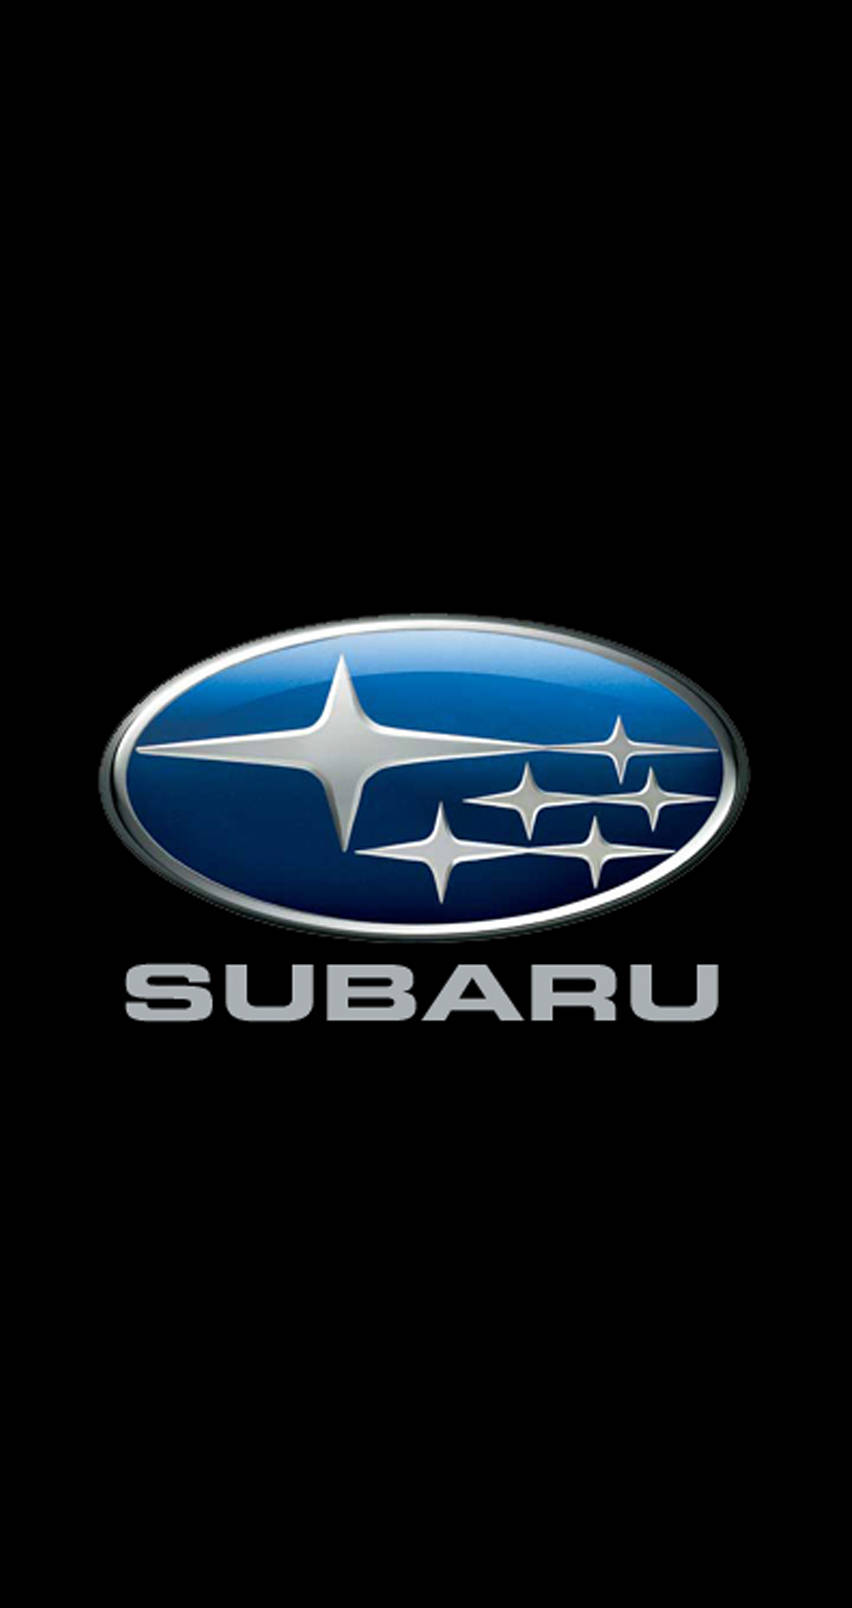 Subaru Impreza STI car bridge dusk 640x1136 iPhone 55S5CSE wallpaper  background picture image